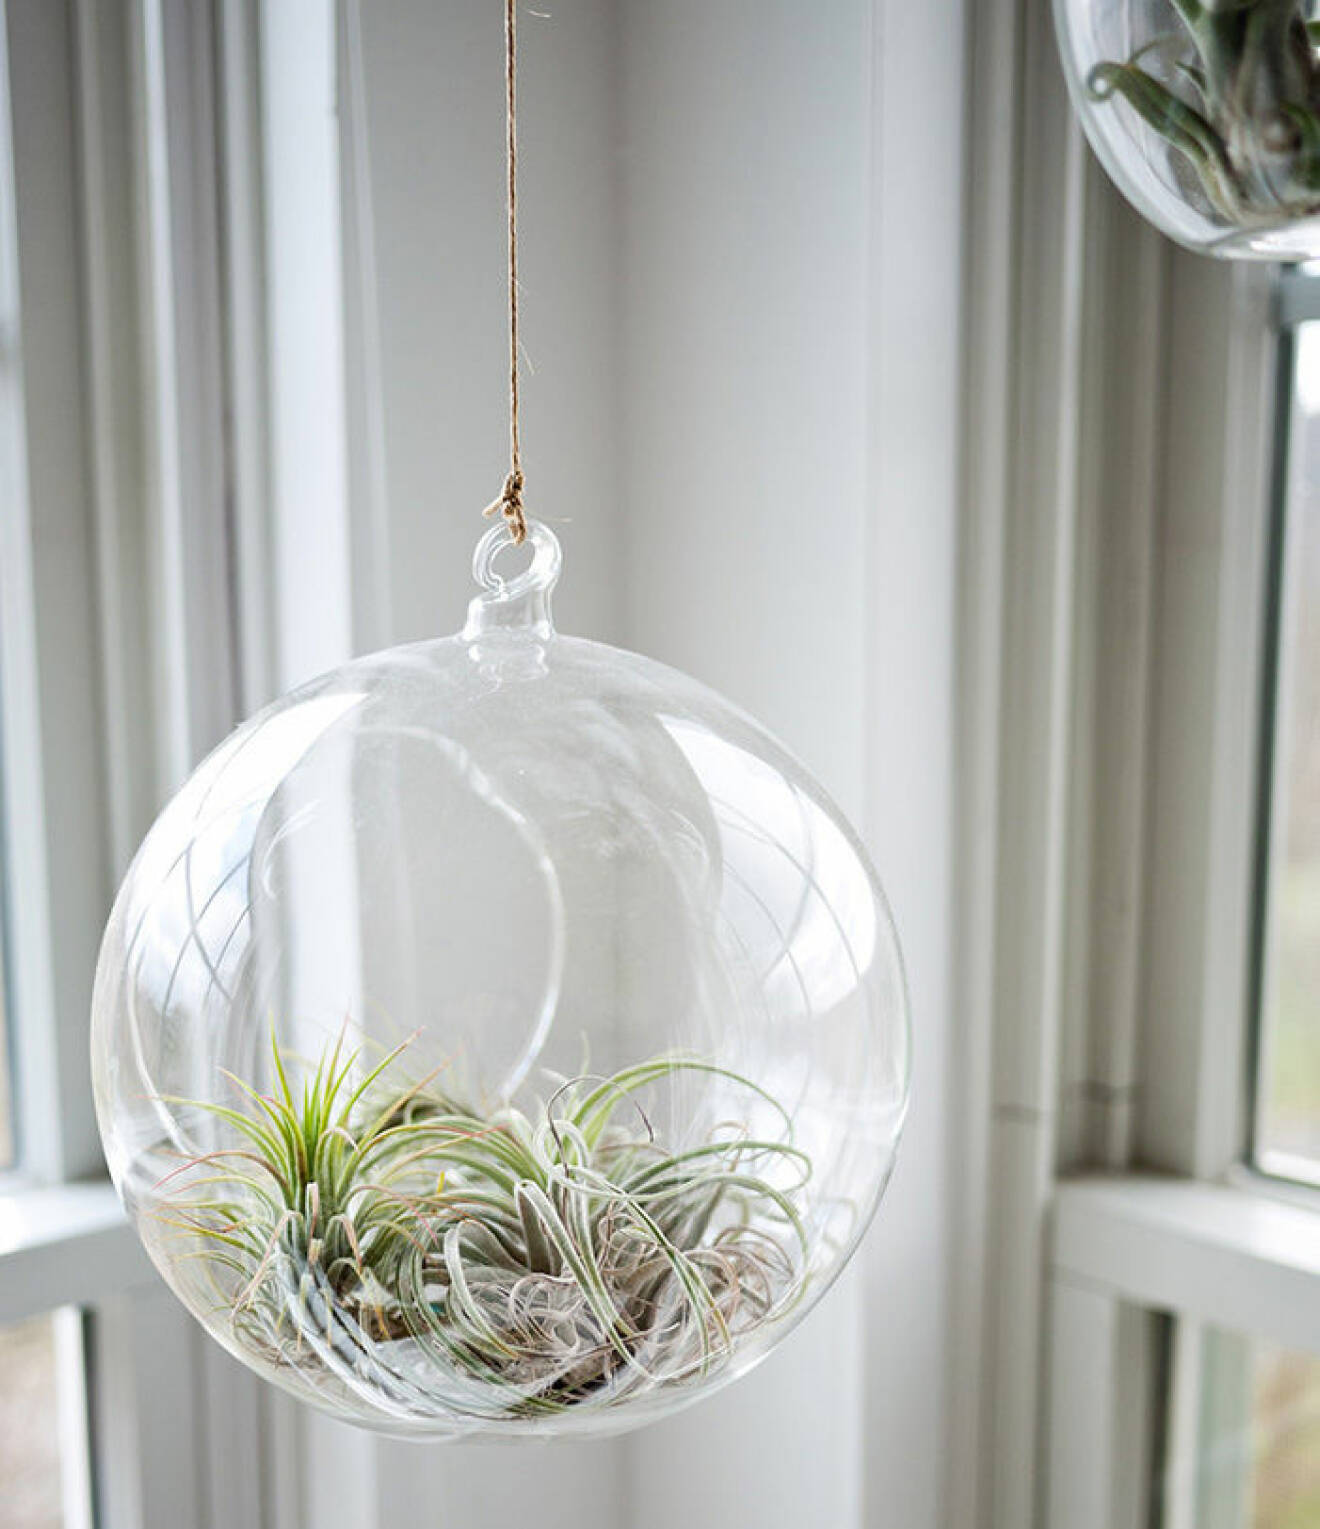 Luftplanta hängandes i en glaskula